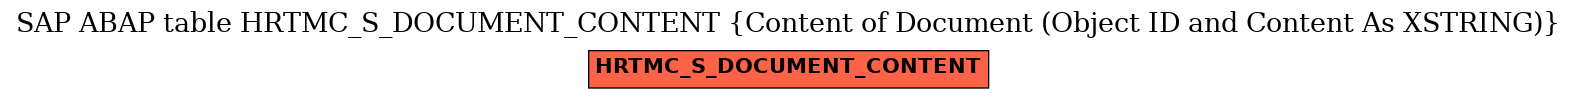 E-R Diagram for table HRTMC_S_DOCUMENT_CONTENT (Content of Document (Object ID and Content As XSTRING))